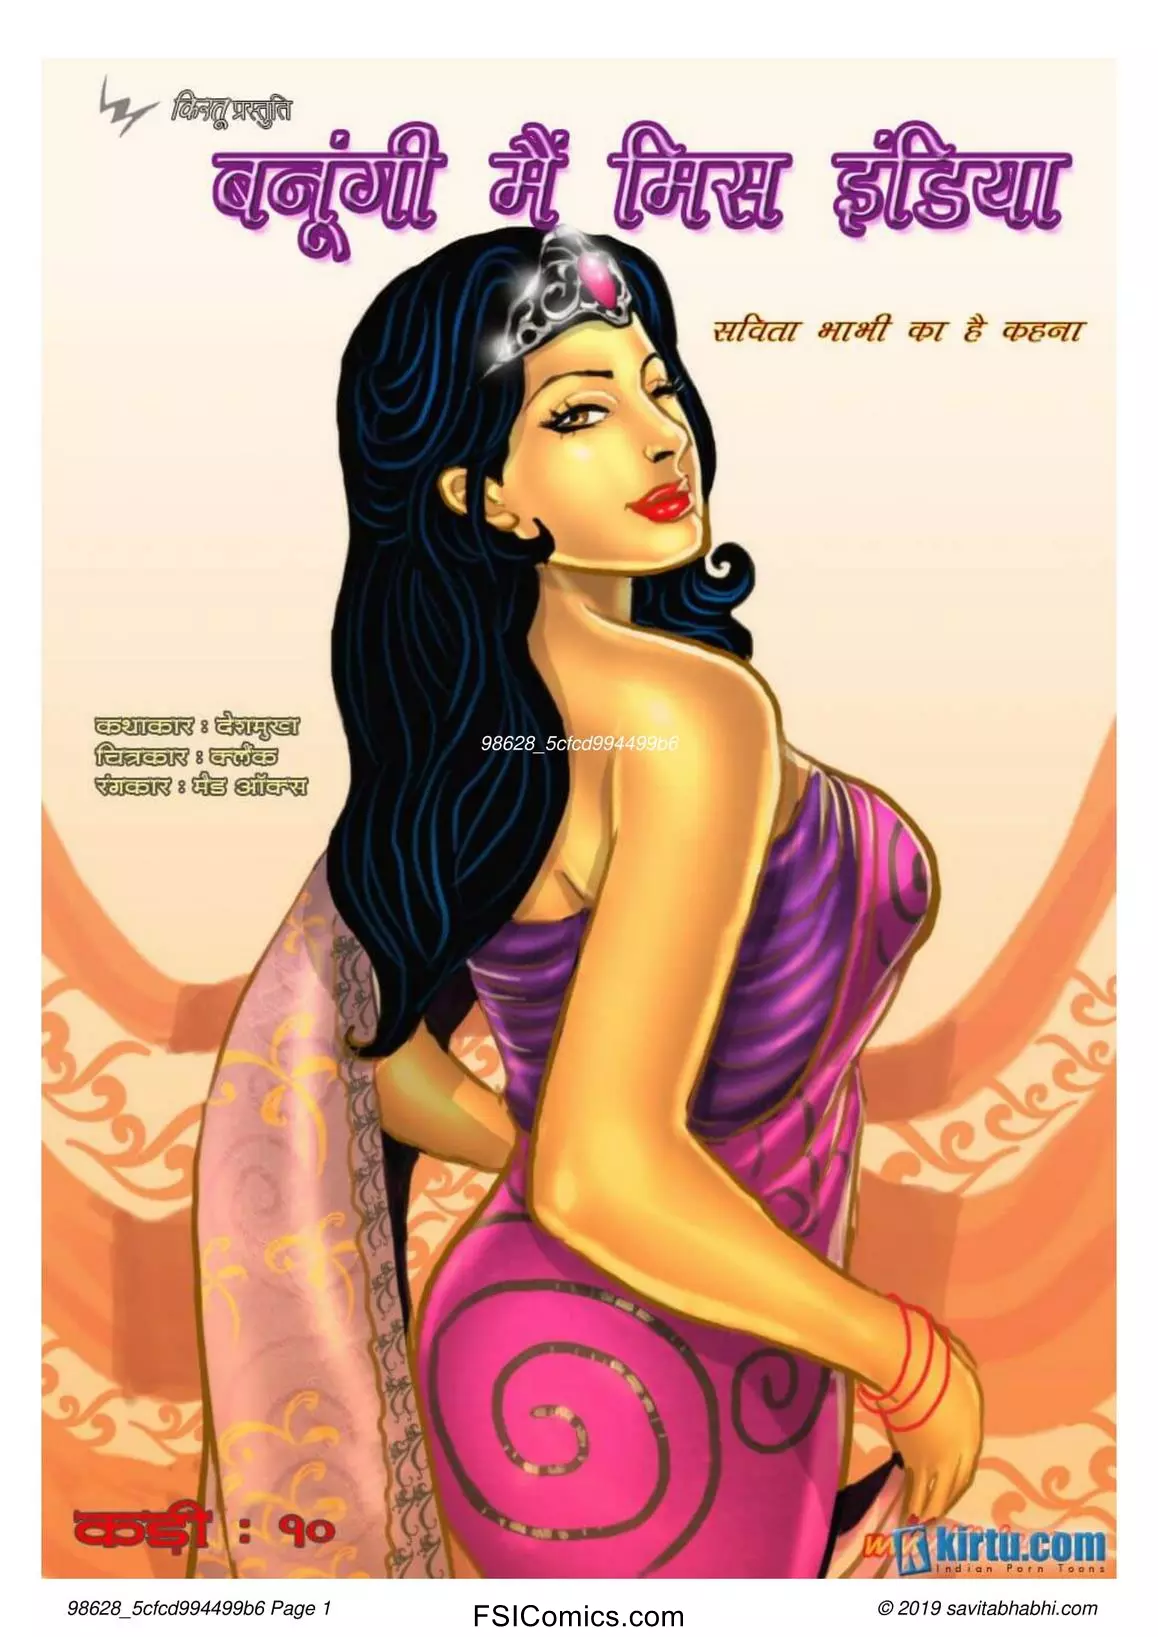 Savita Bhabhi Episode 10 Hindi – Main Banugi Miss India- (मैं बनूँगी मिस इन्डिया) - 7 - FSIComics